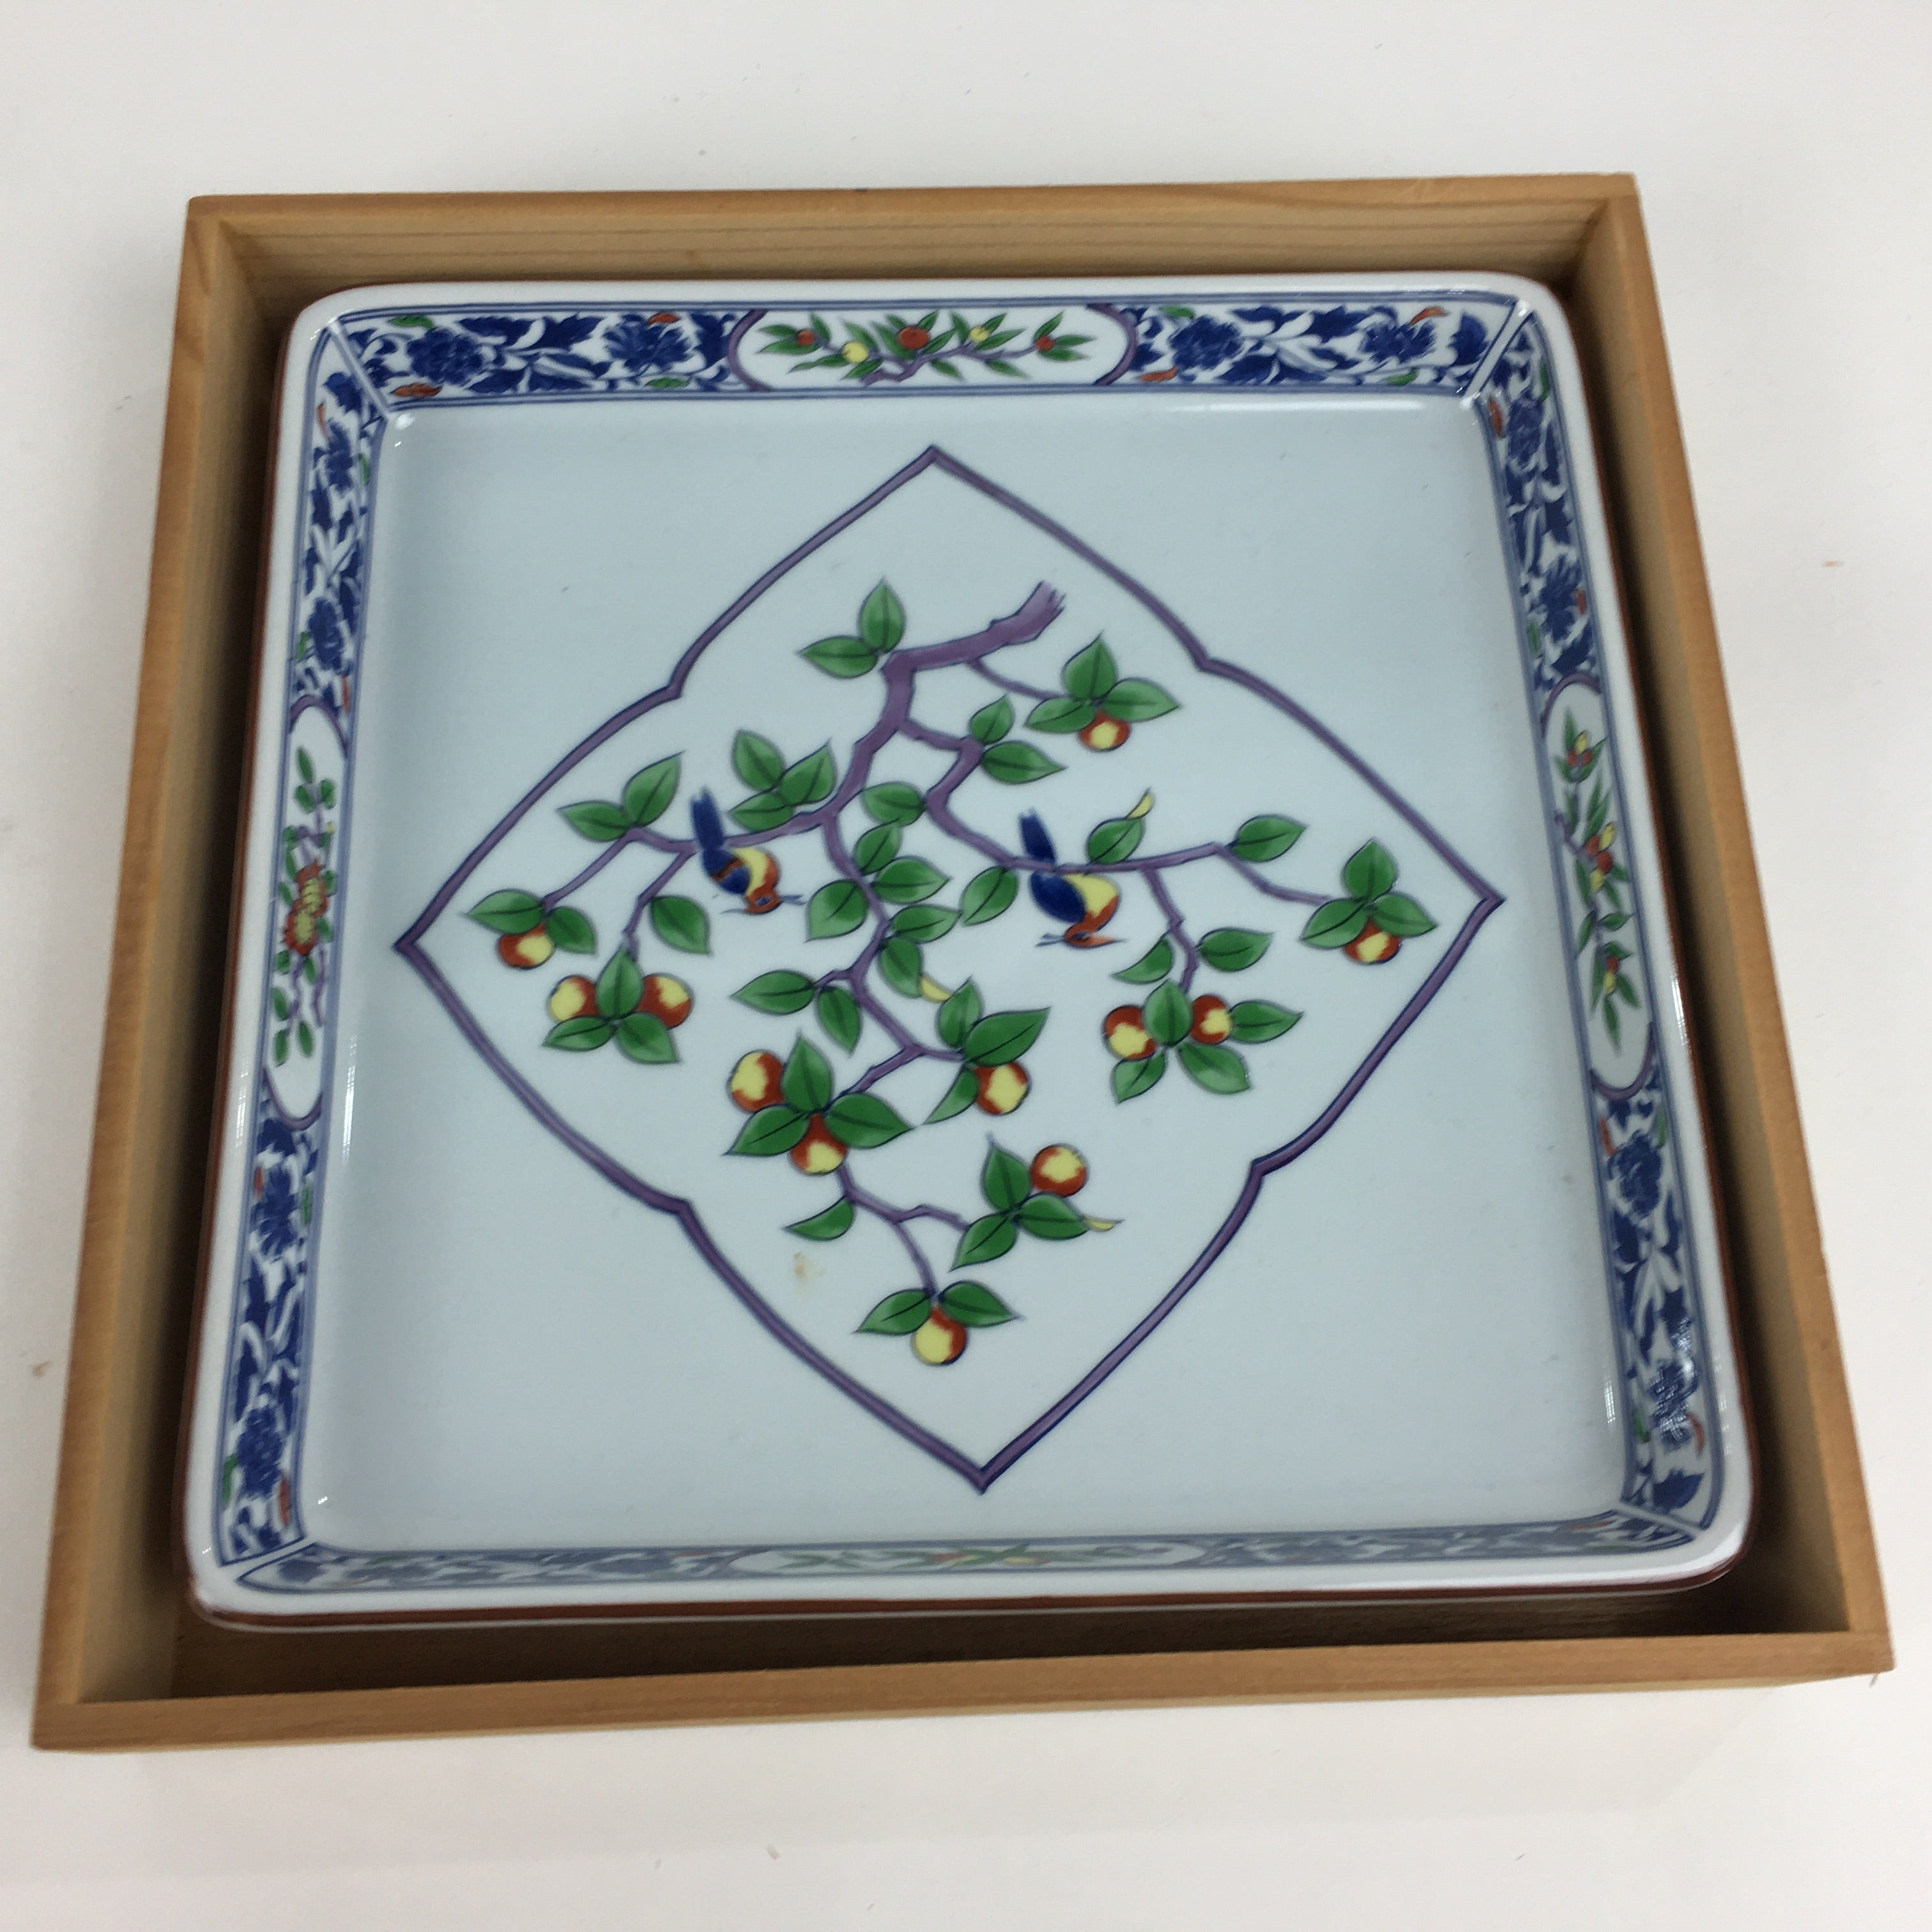 Japanese Porcelain Sometsuke Plate Vtg Tachikichi Square Boxed Birds PX591